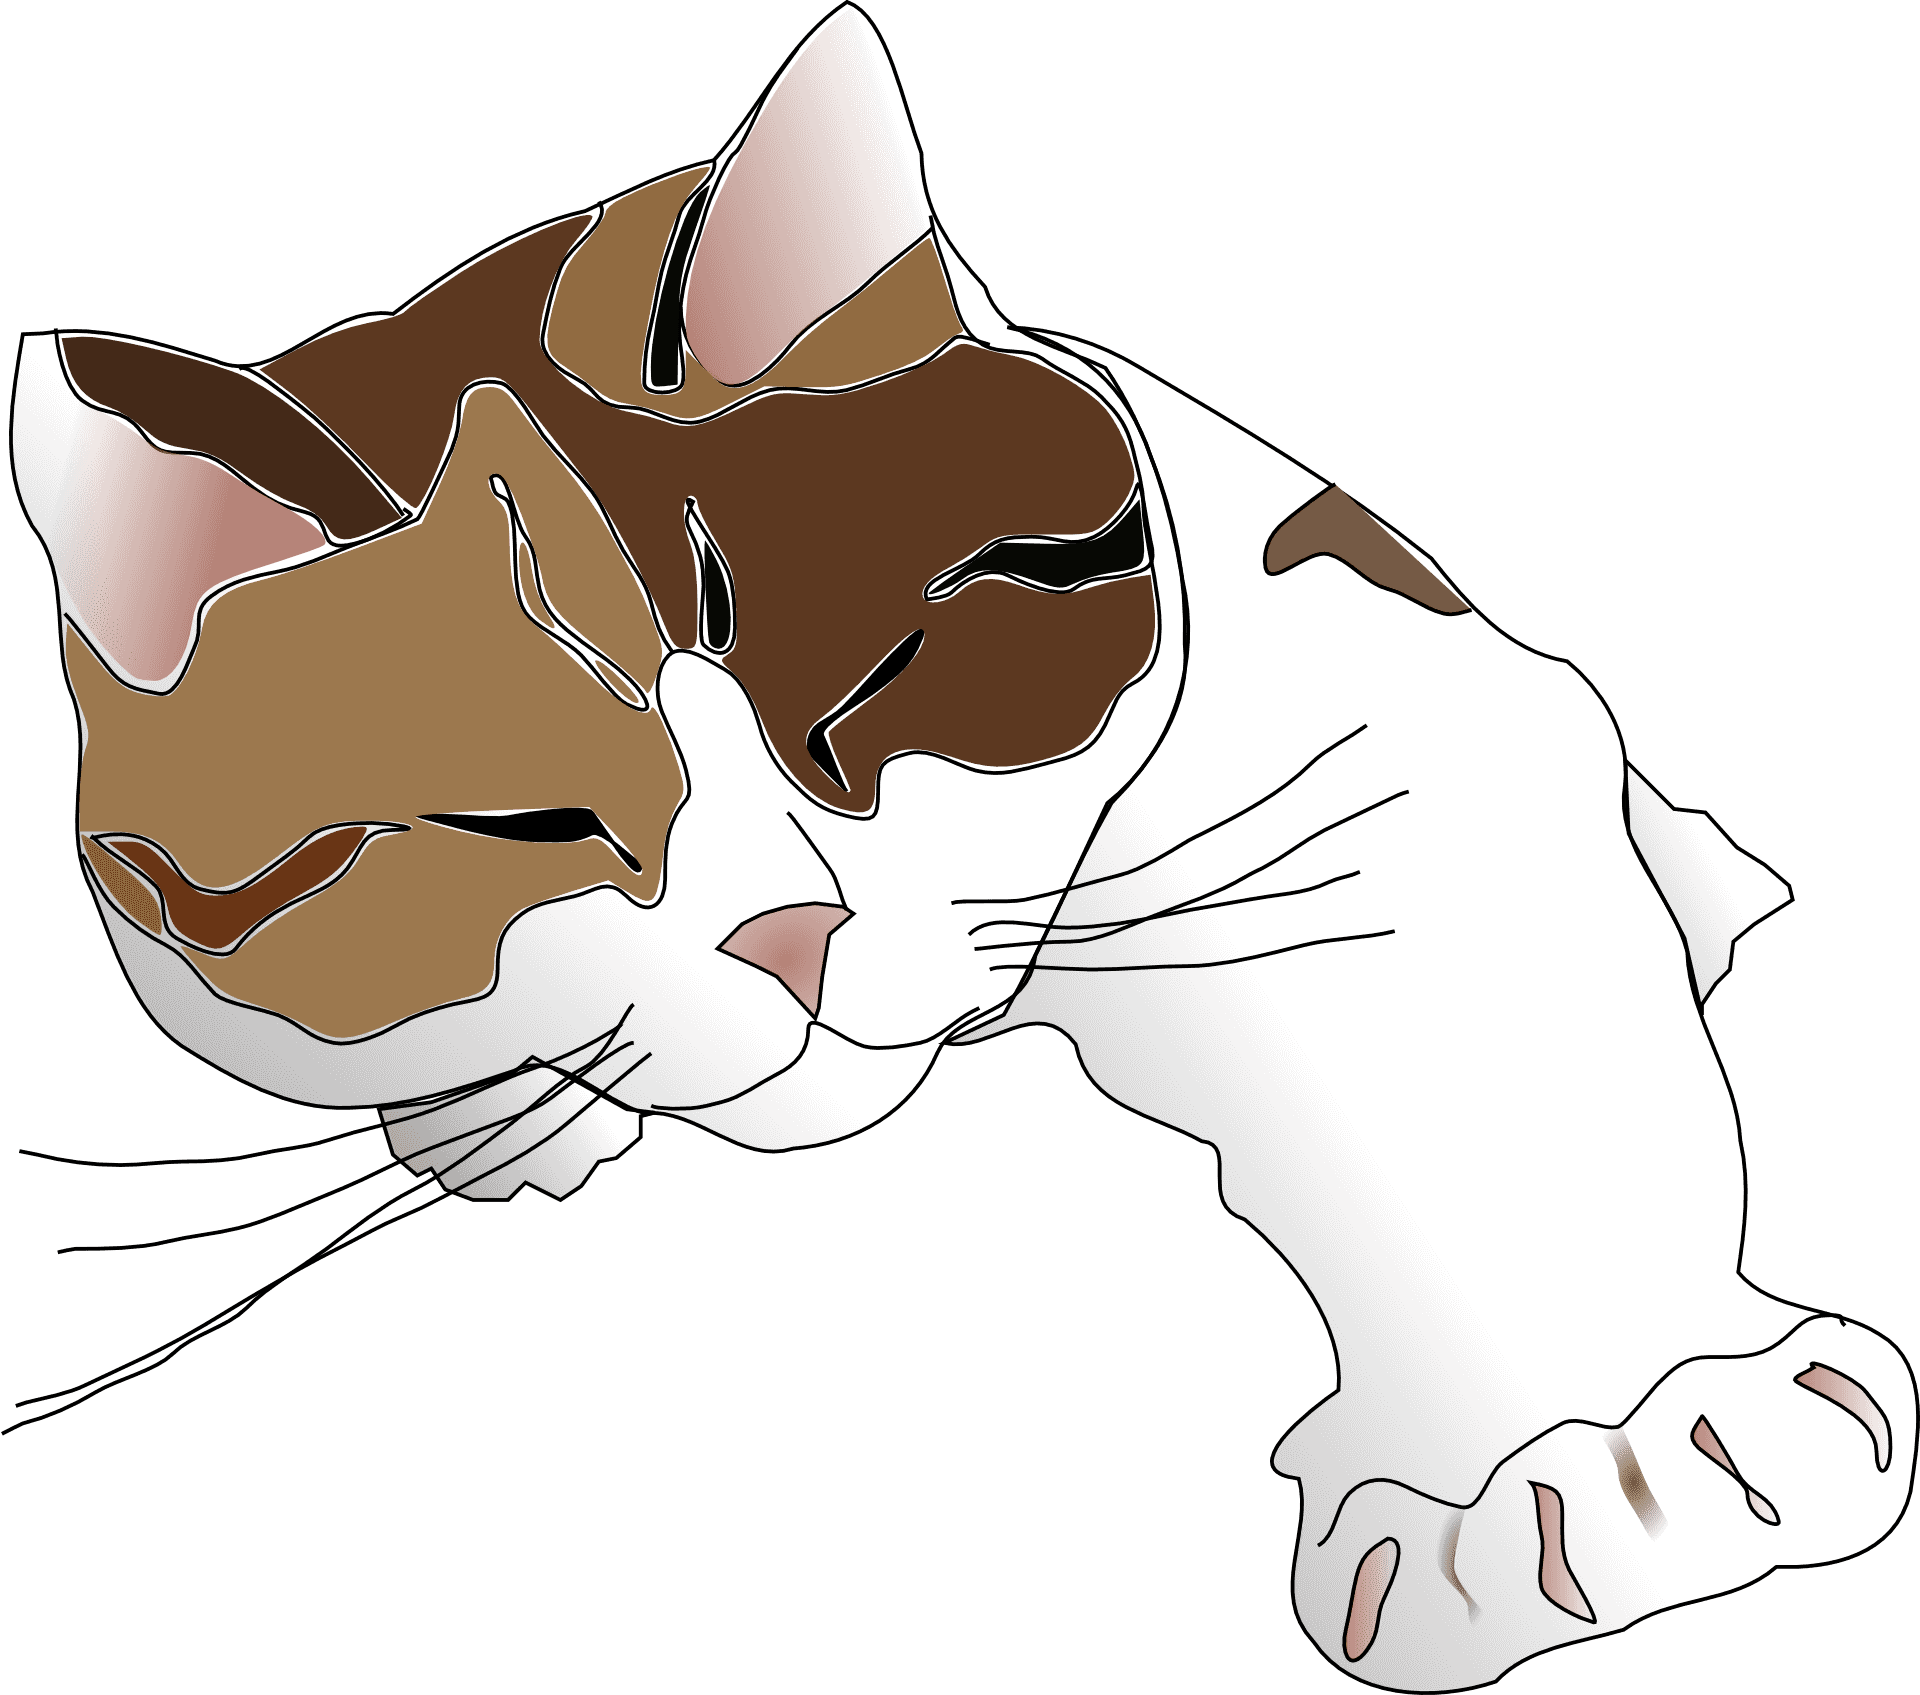 Sleeping Calico Cat Illustration PNG image